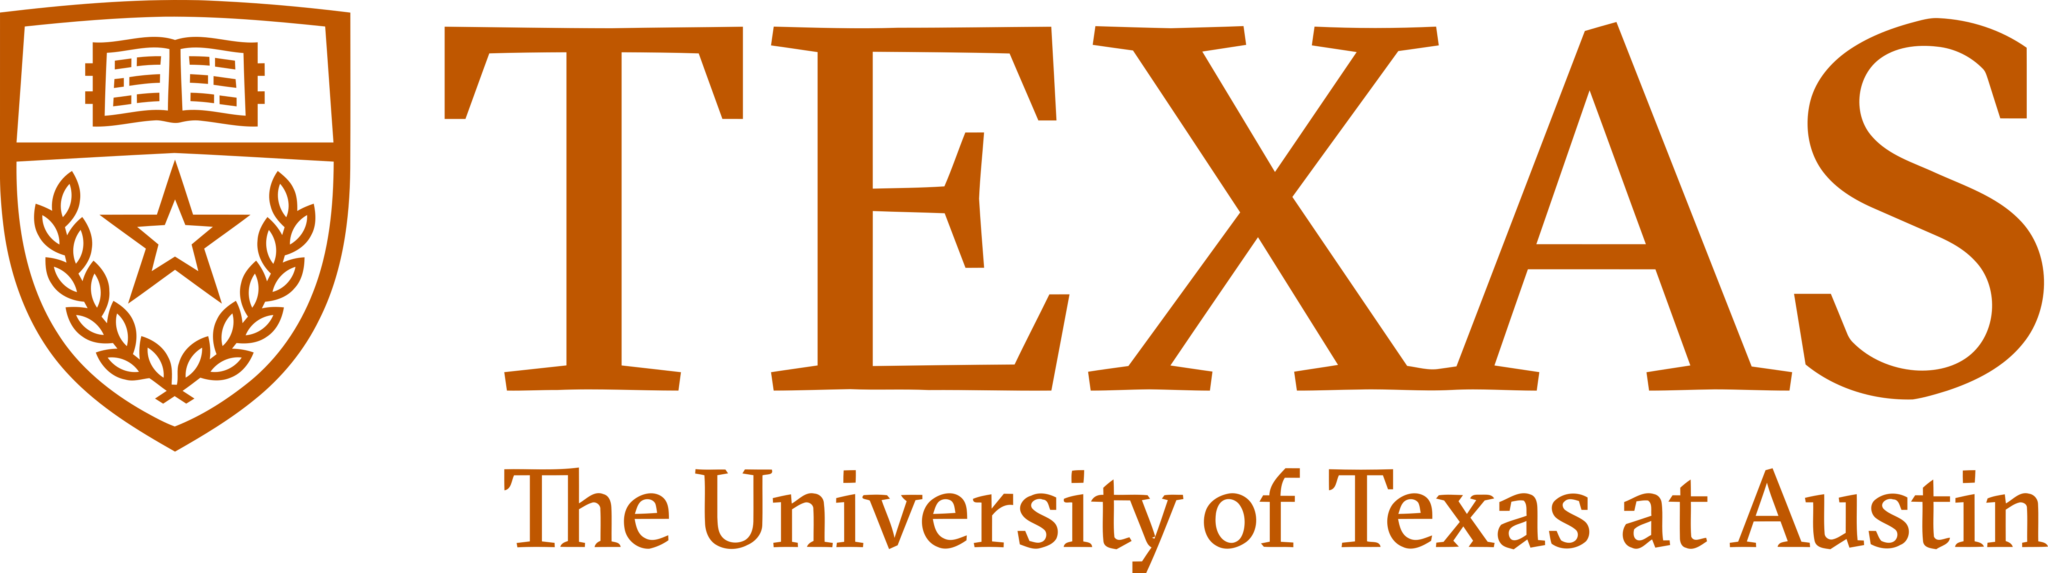 University of Texas, Austin logo